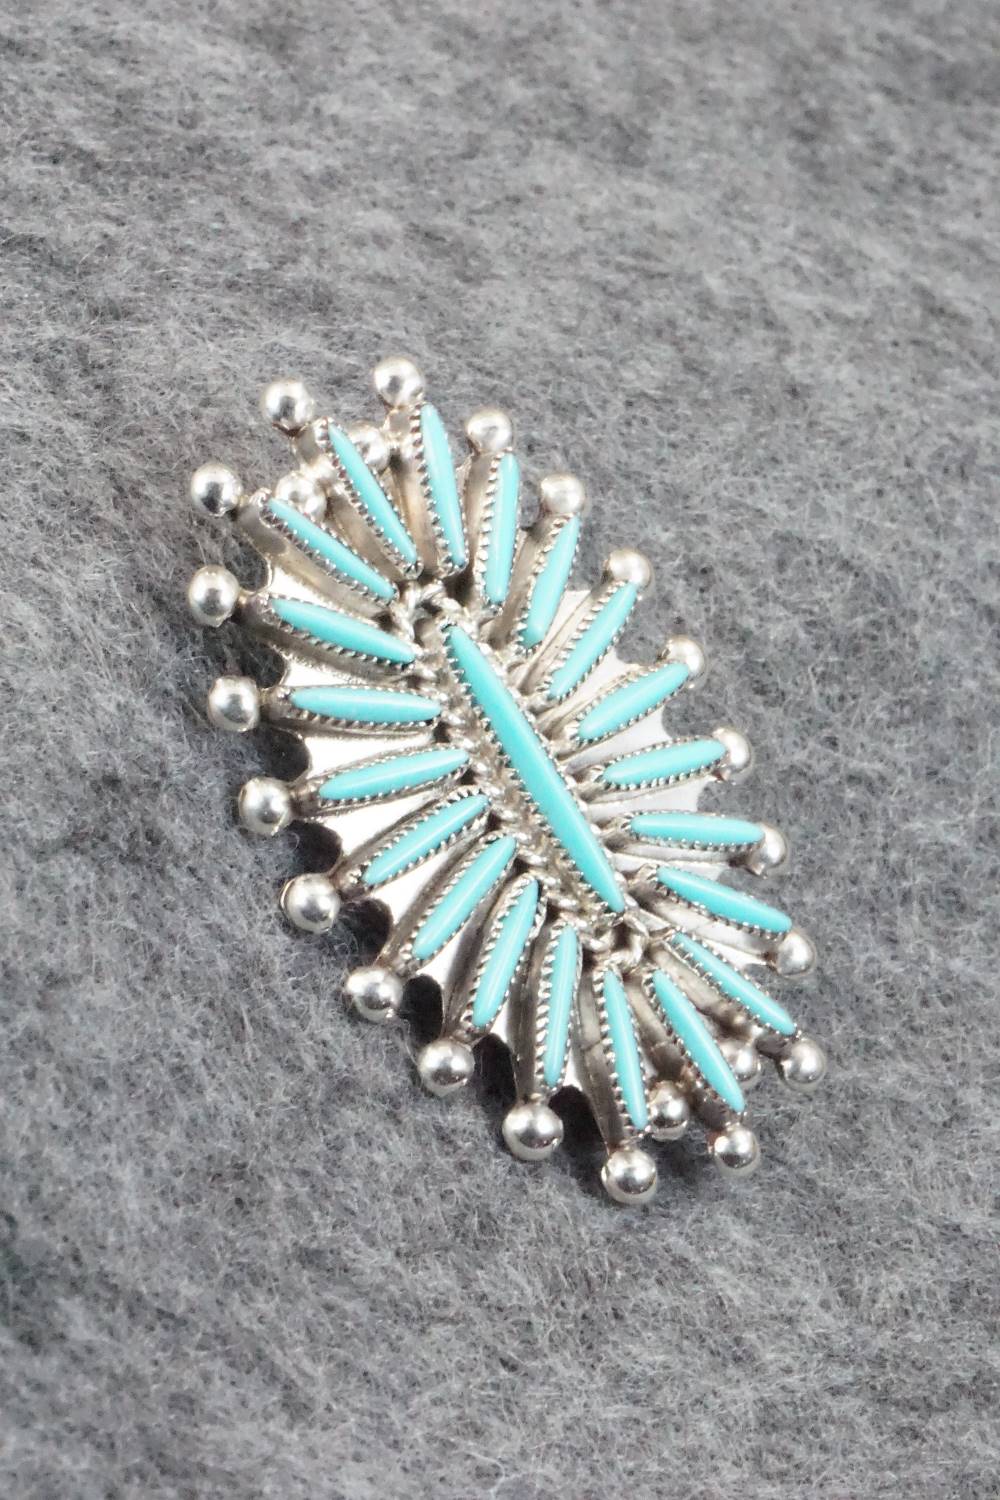 Turquoise & Sterling Silver Pendant/ Pin - Lorraine Waatsa